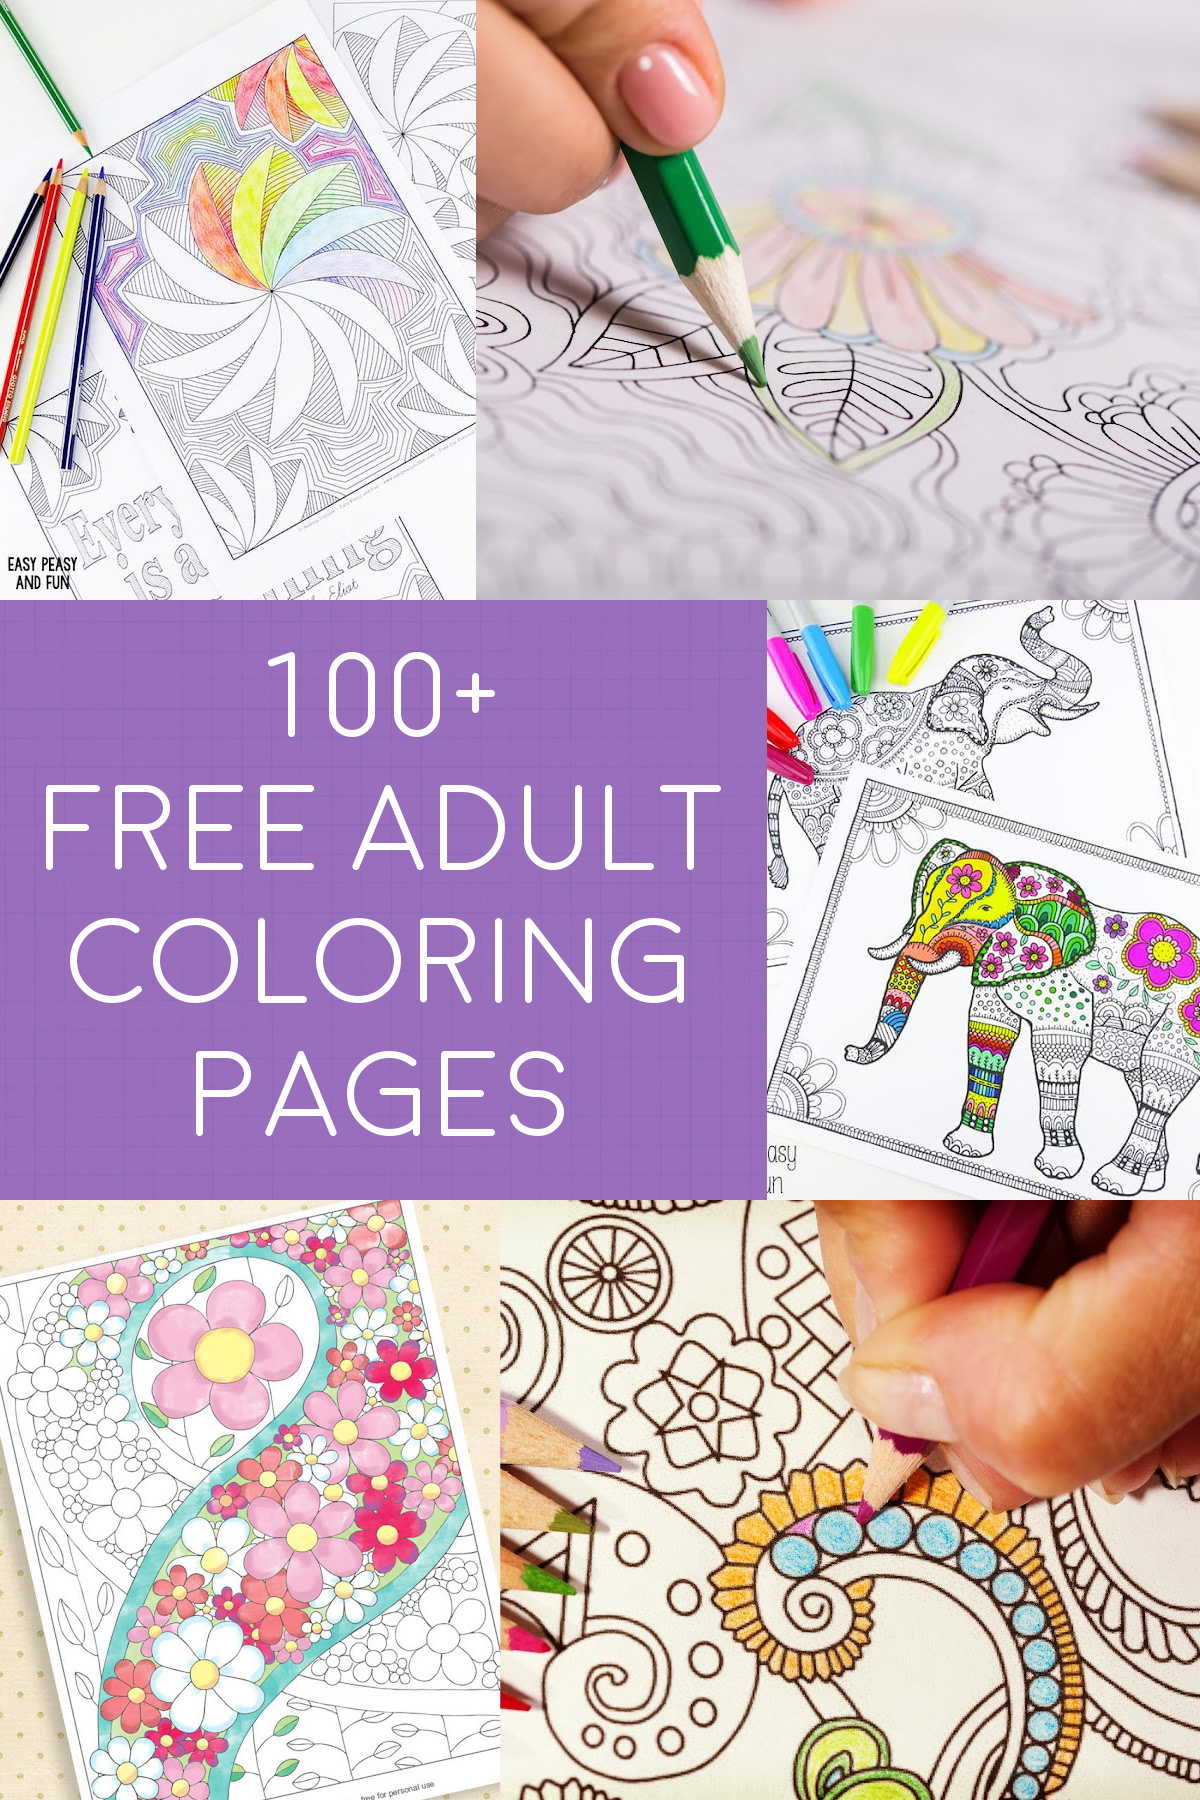 100 Beautiful Big Book Of Mandala Designs: 101 UNIQUE MANDALAS A Big  Mandala Coloring Book with 100 Different Mandalas to Color Adult Coloring   Boo (Paperback)